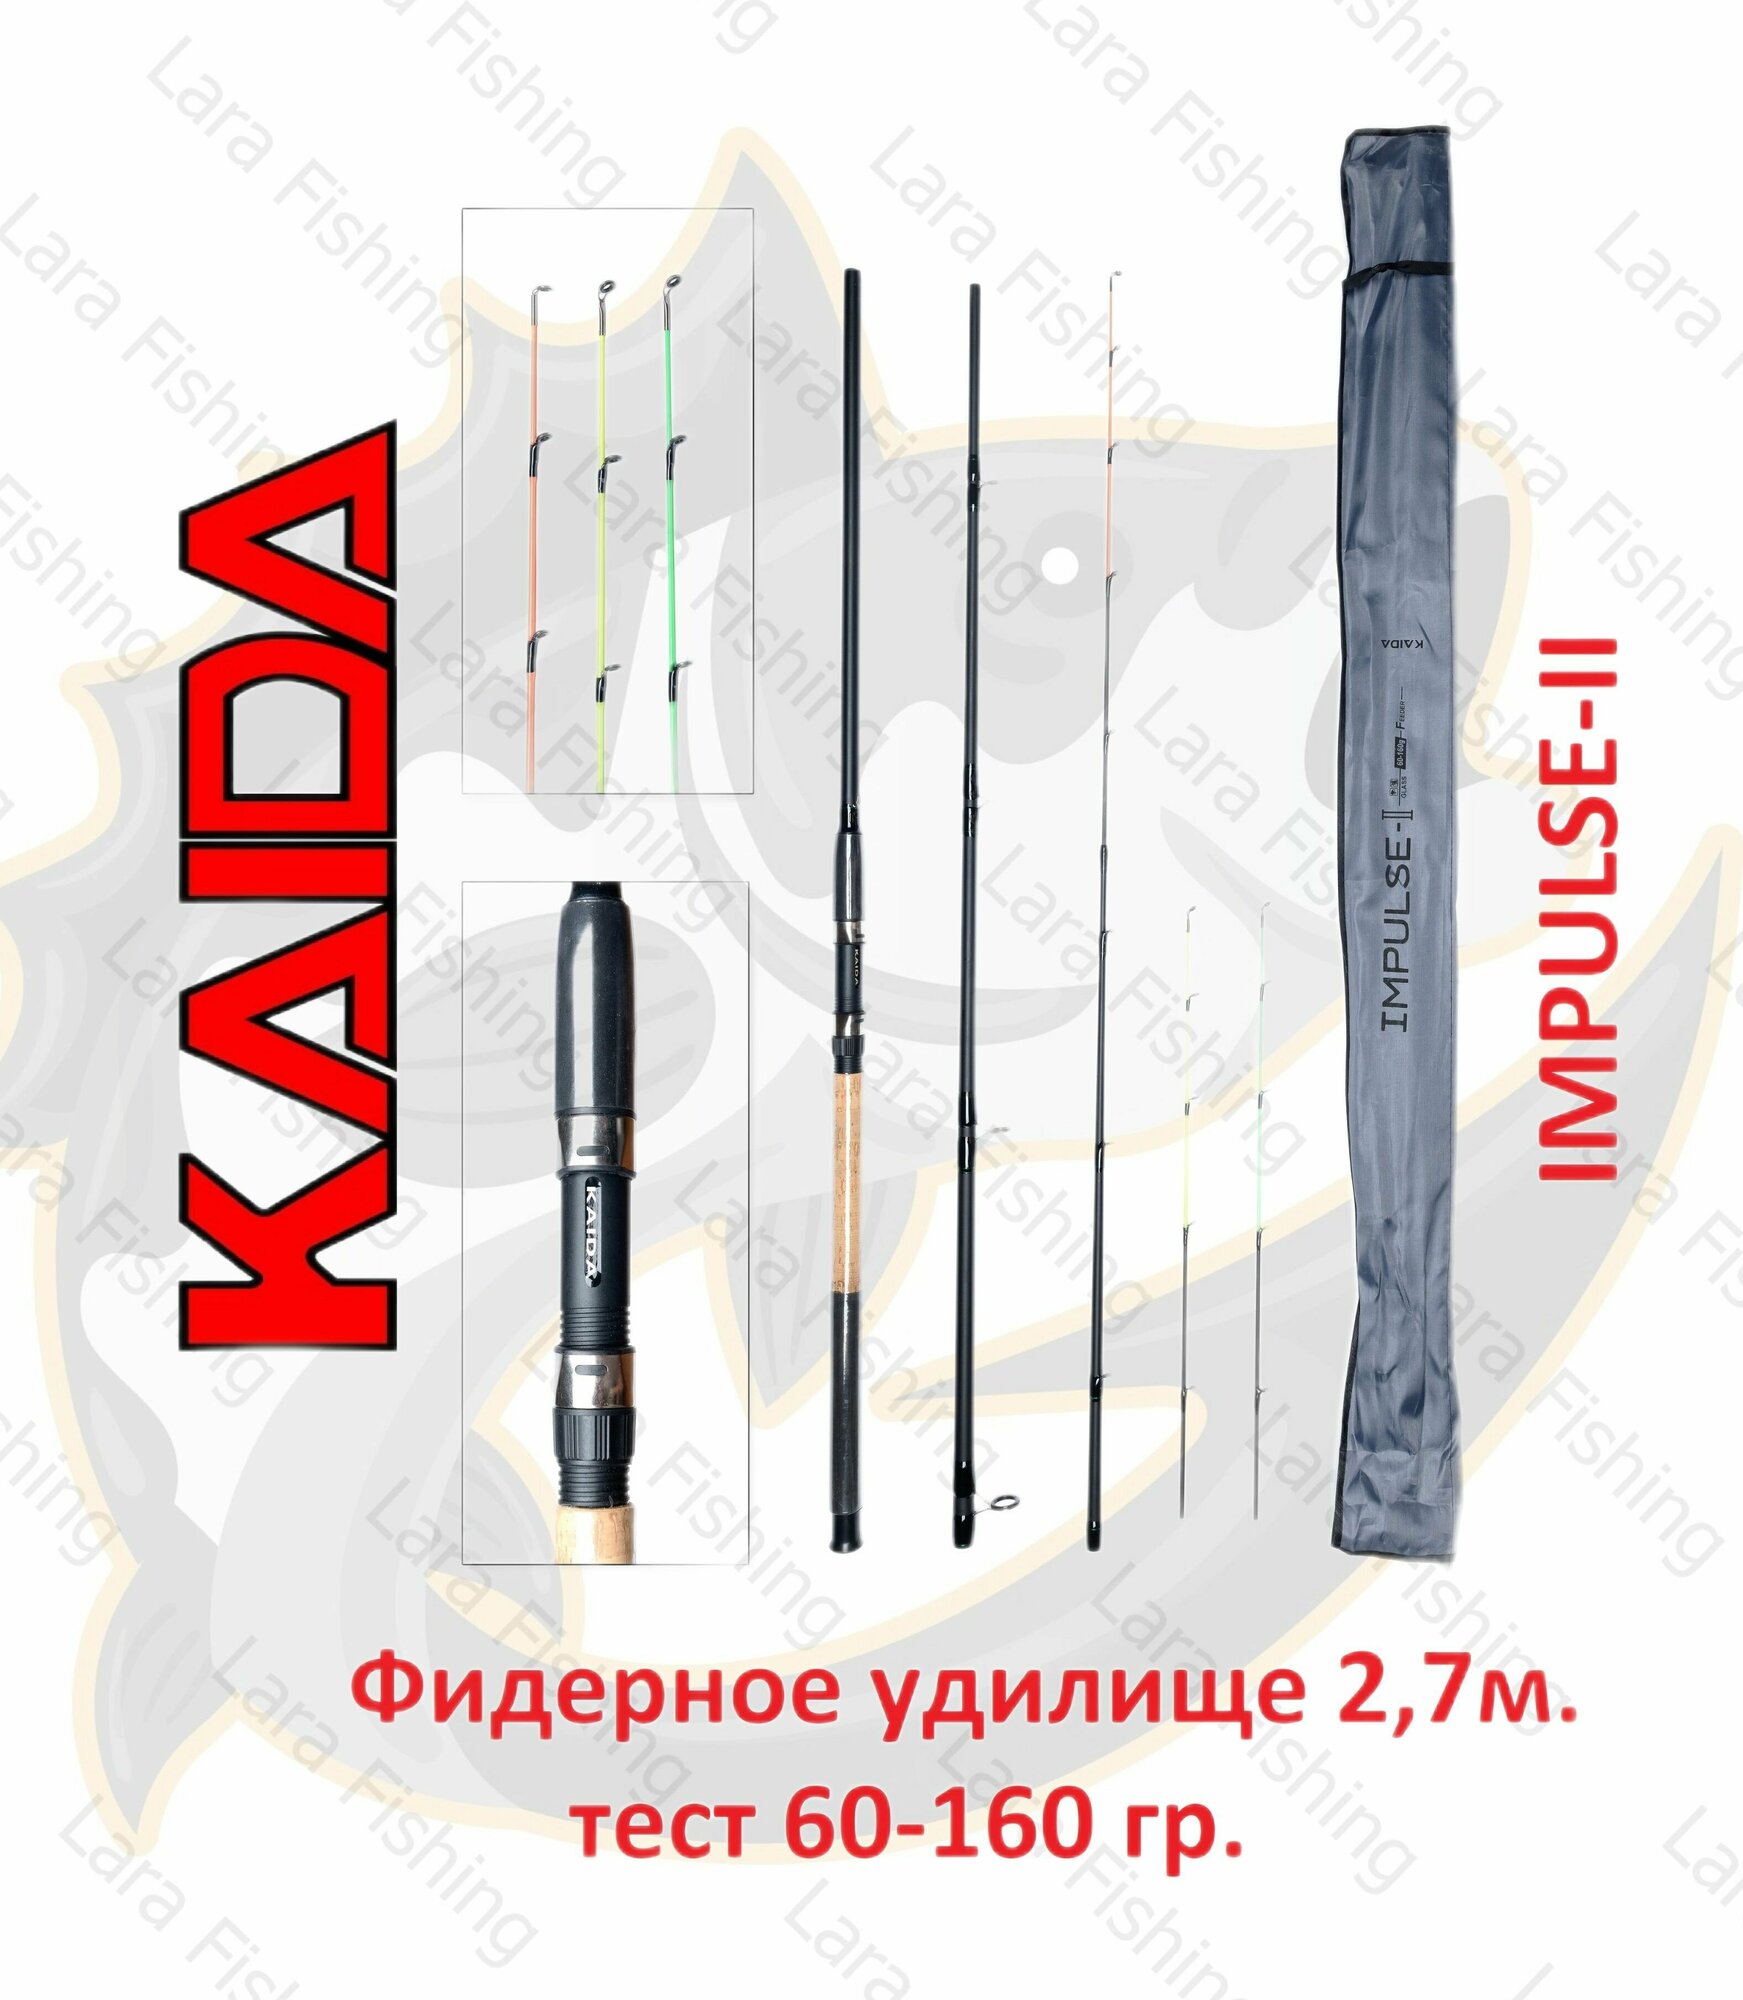 Фидерное удилище Kaida Impulse 2 длина 2,70 м тест 60-160 гр.